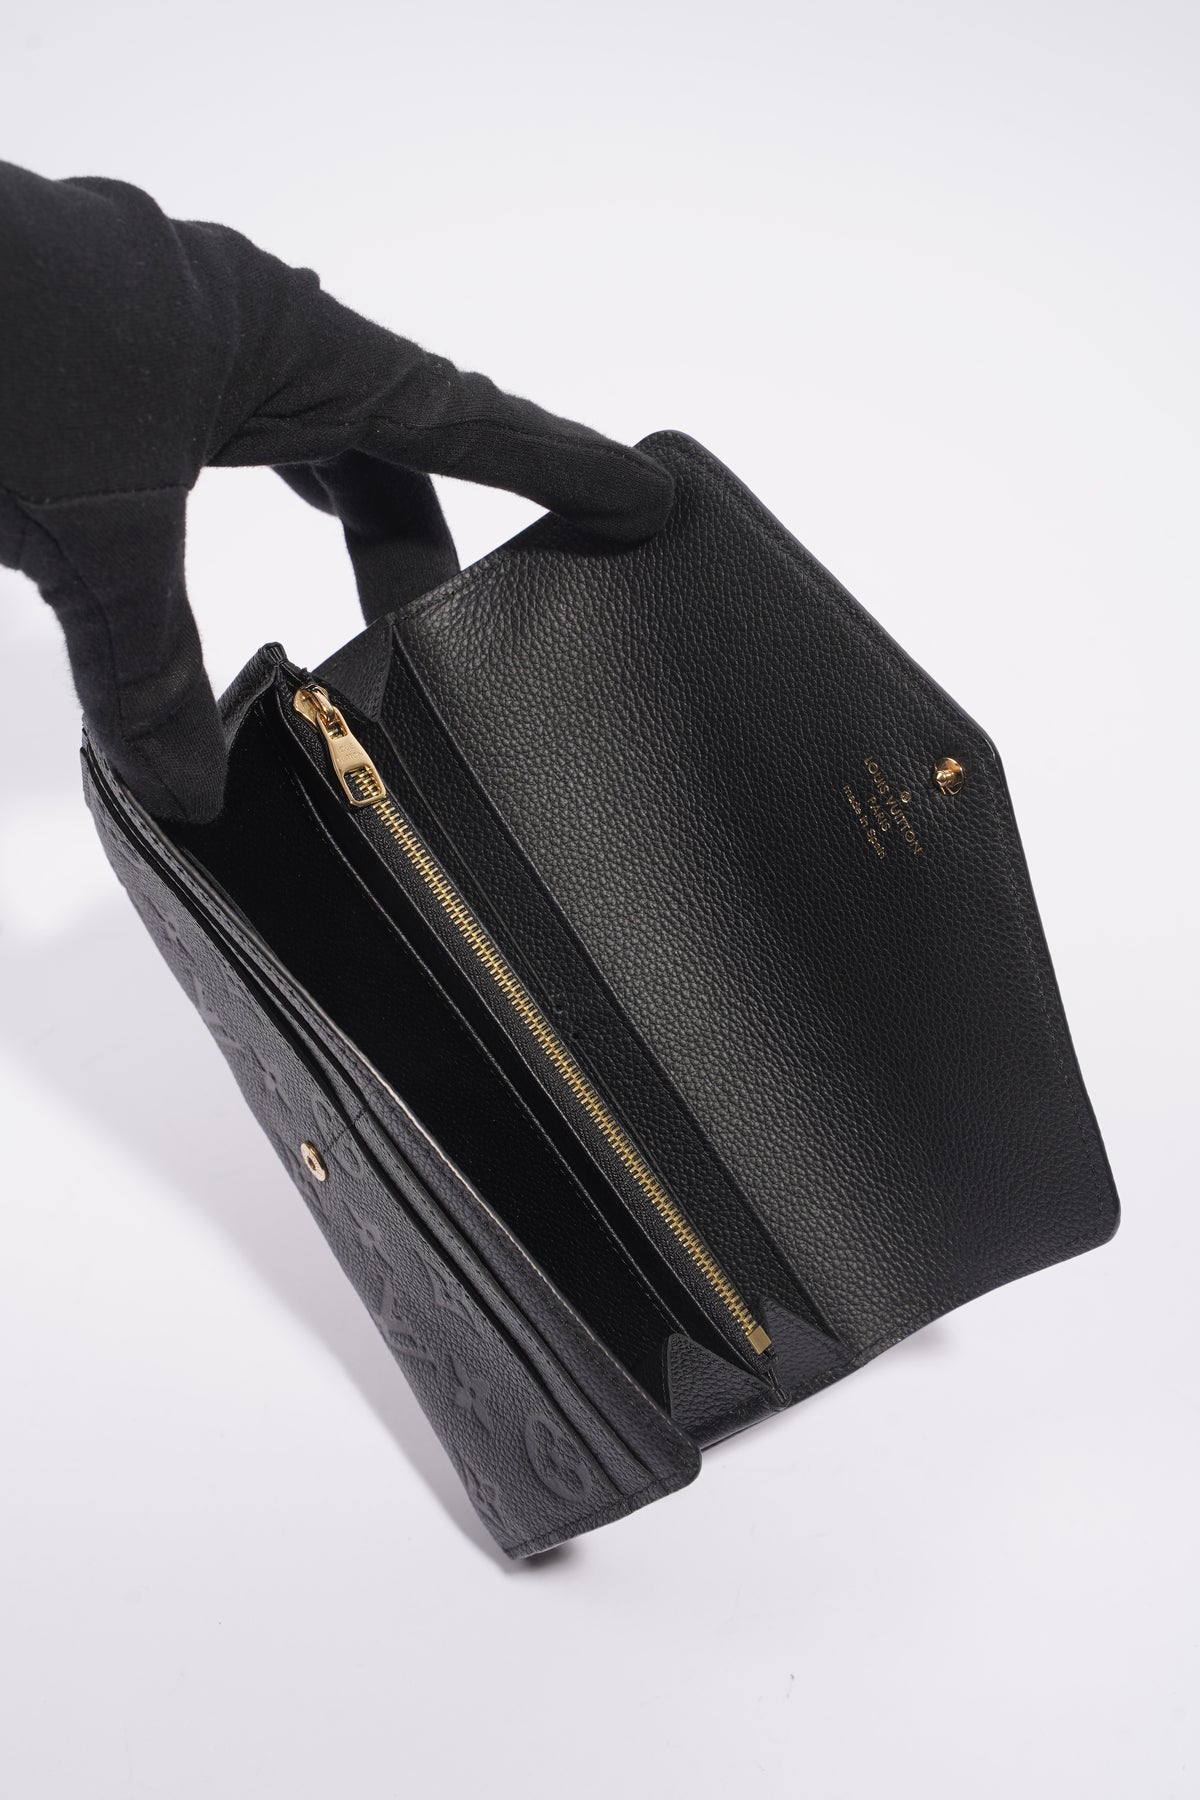 Like New Louis Vuitton Empreinte Black Leather wallet Bo-Fold